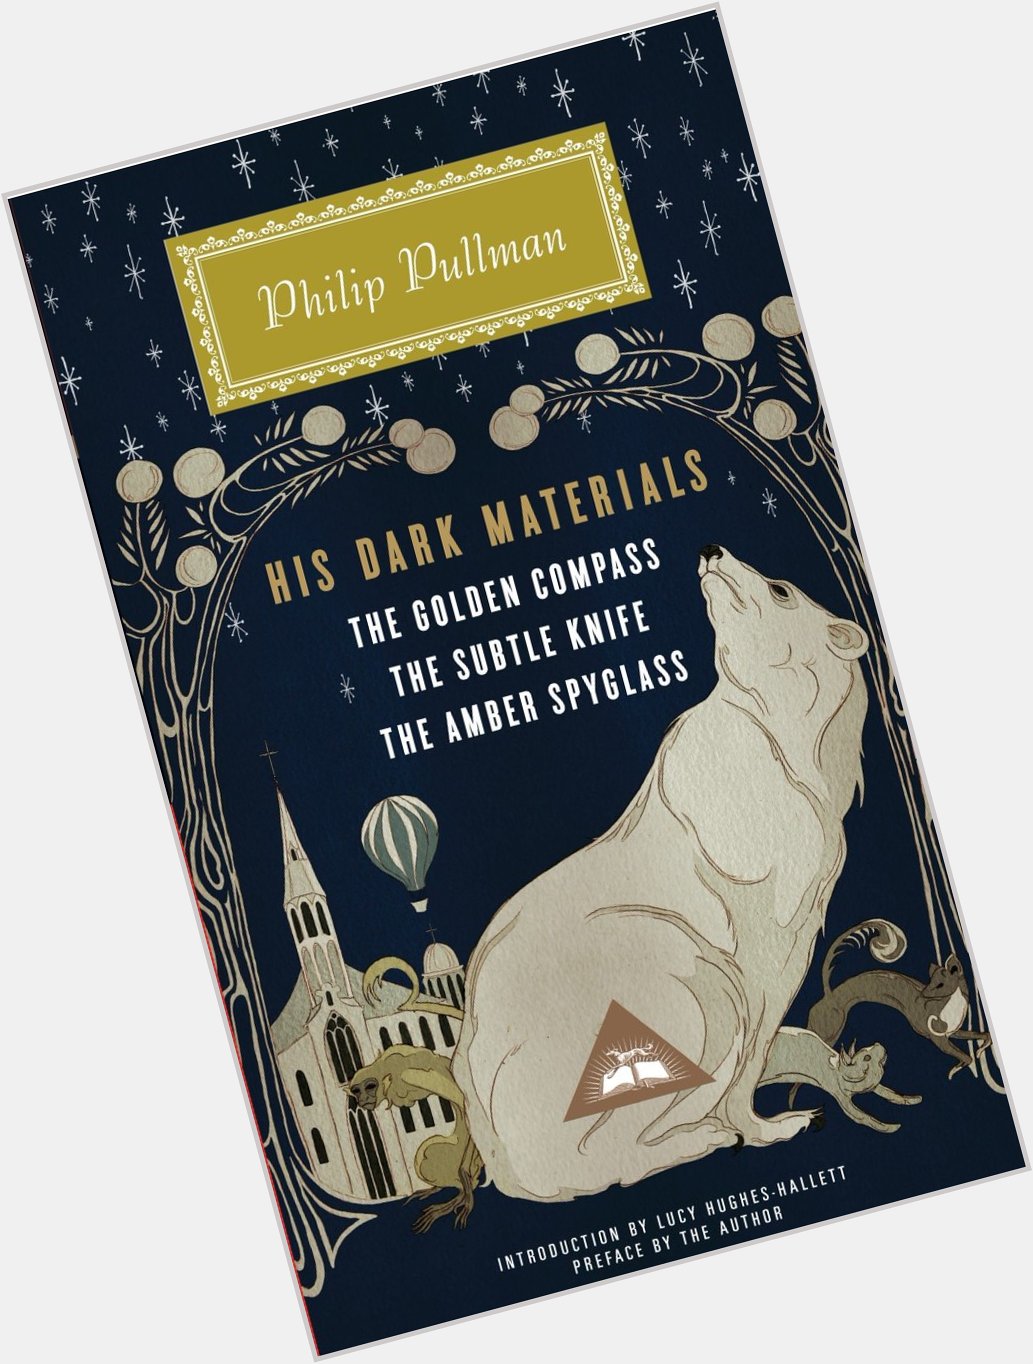 Happy Birthday, Philip Pullman! (October 19) 